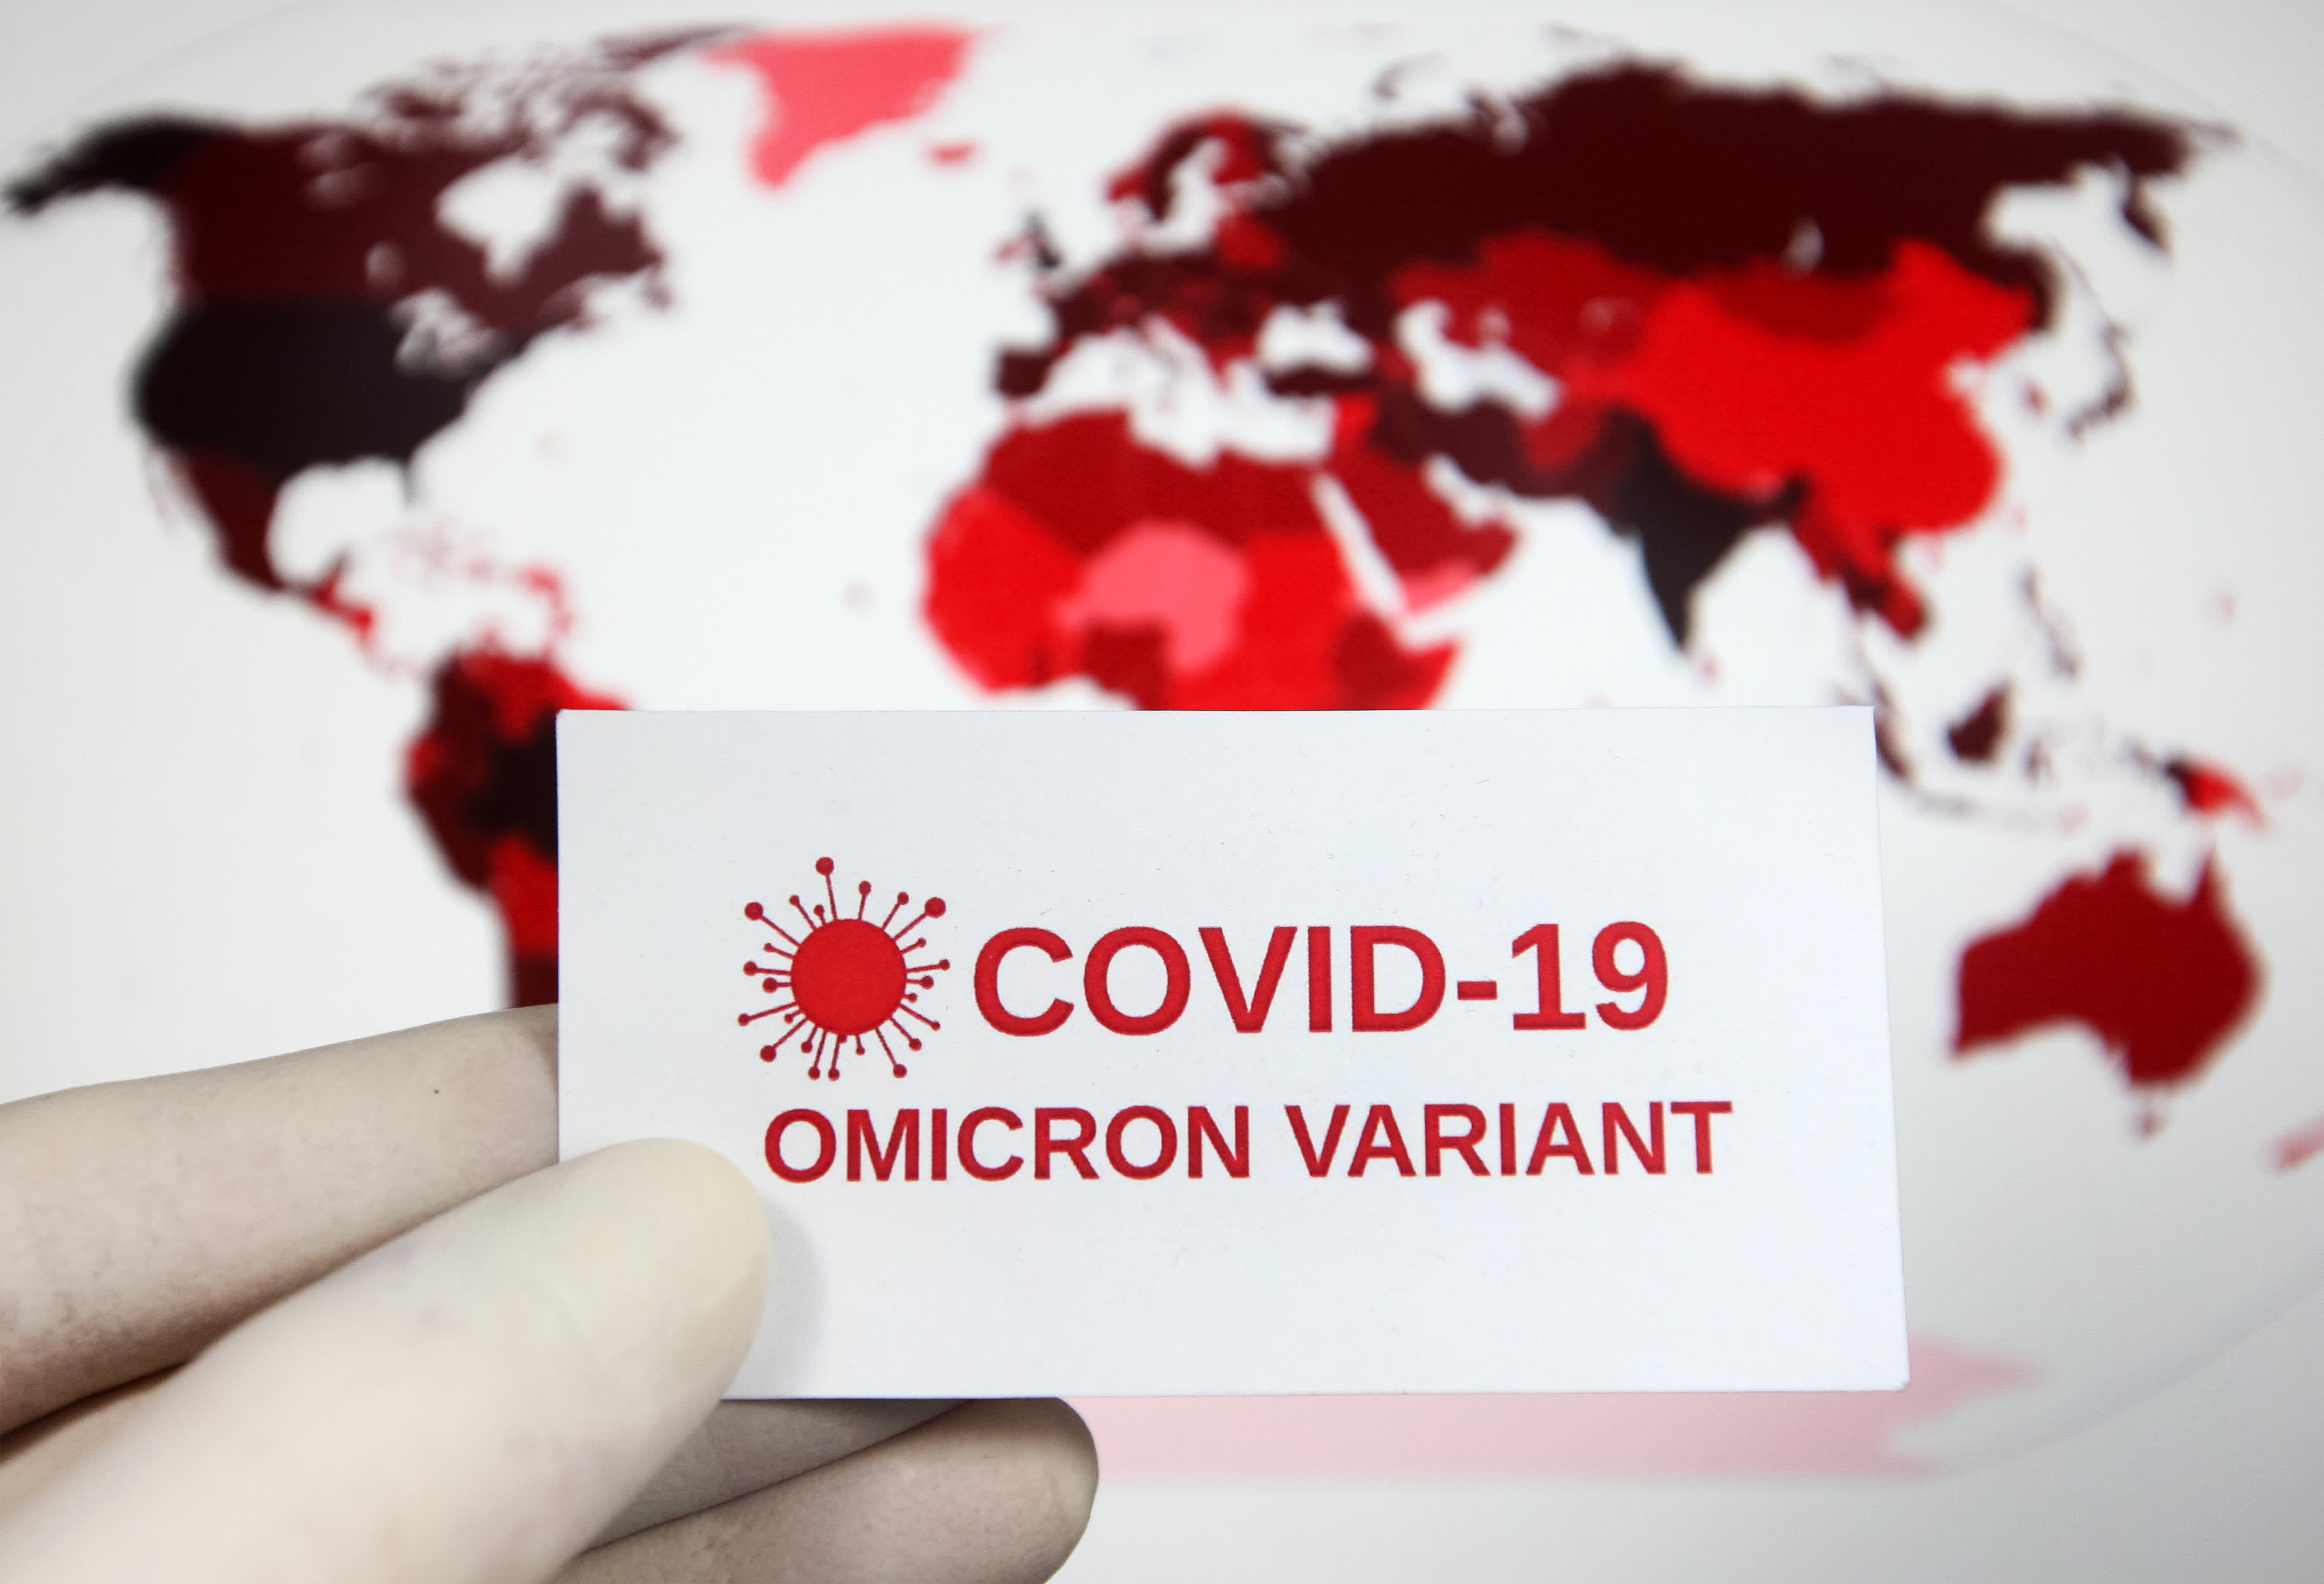 Andy Slavitt on omicron Covid variant, vaccines